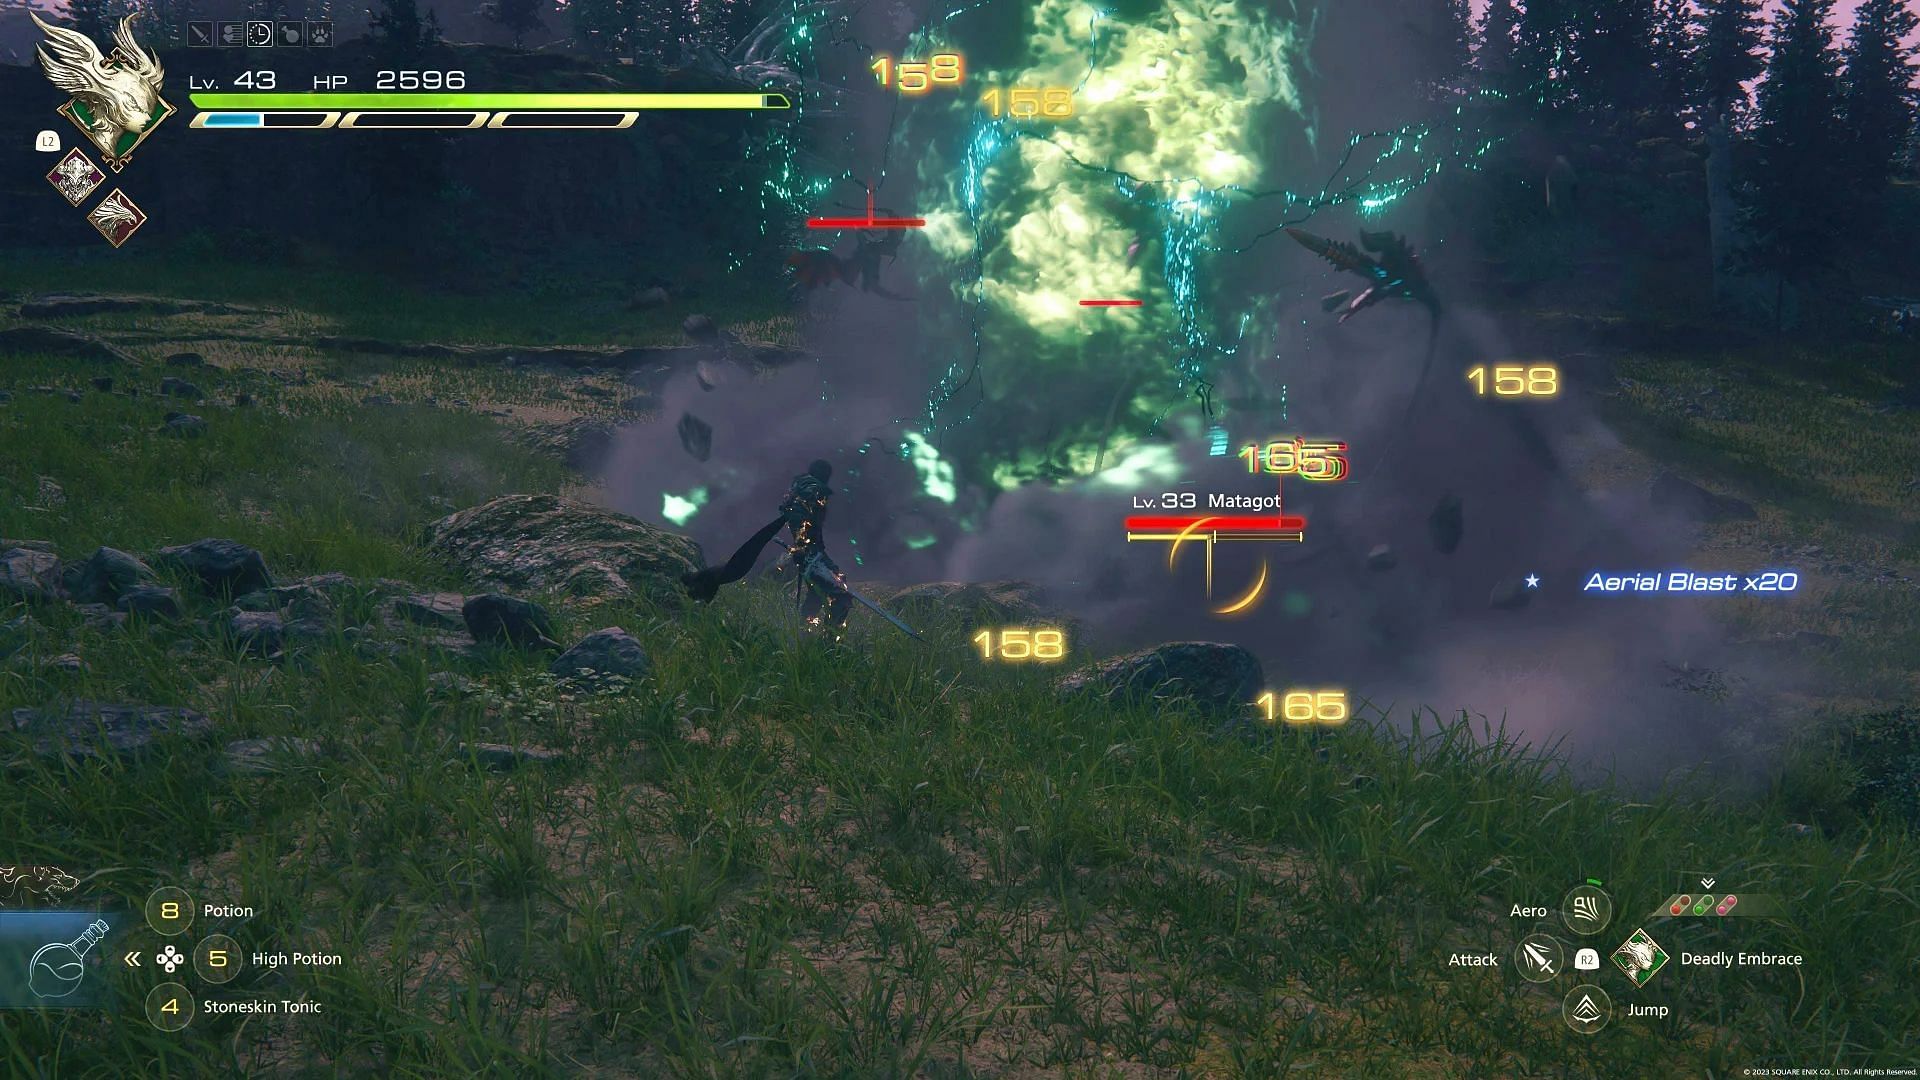 Aerial Blast in Final Fantasy 16 (image via Square Enix)